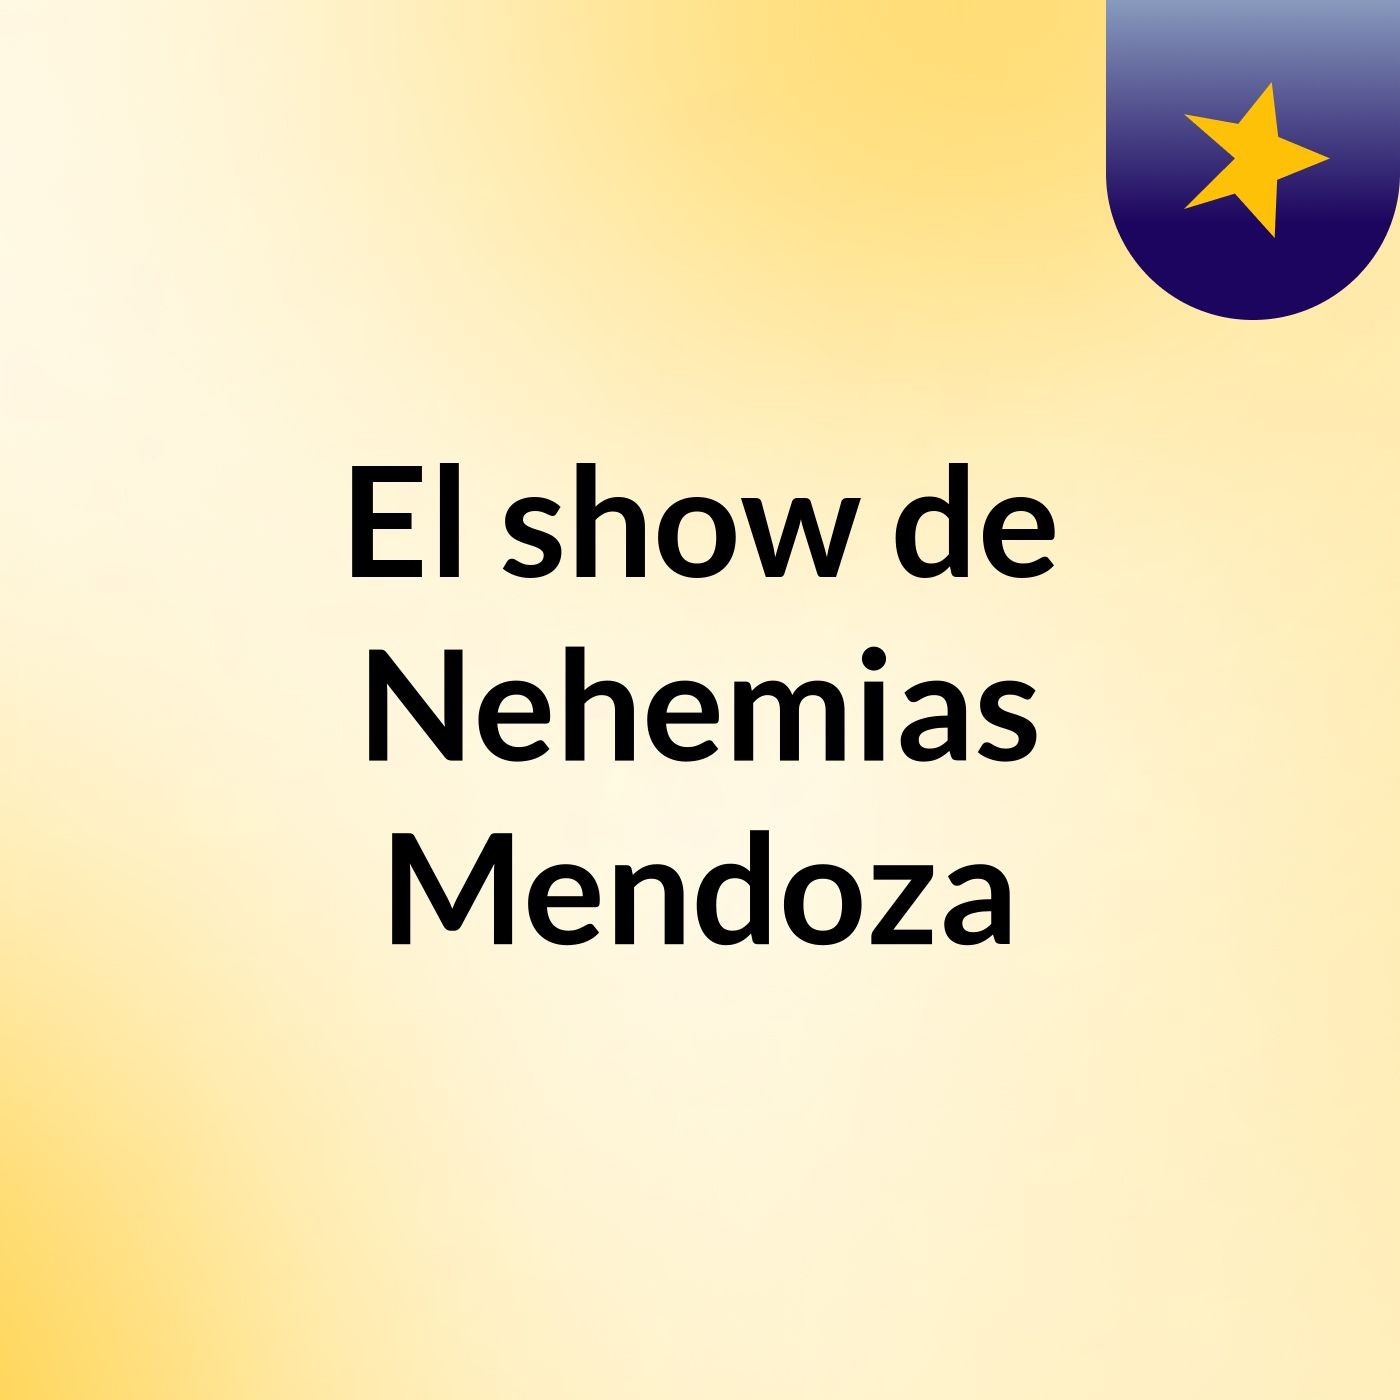 El show de Nehemias Mendoza